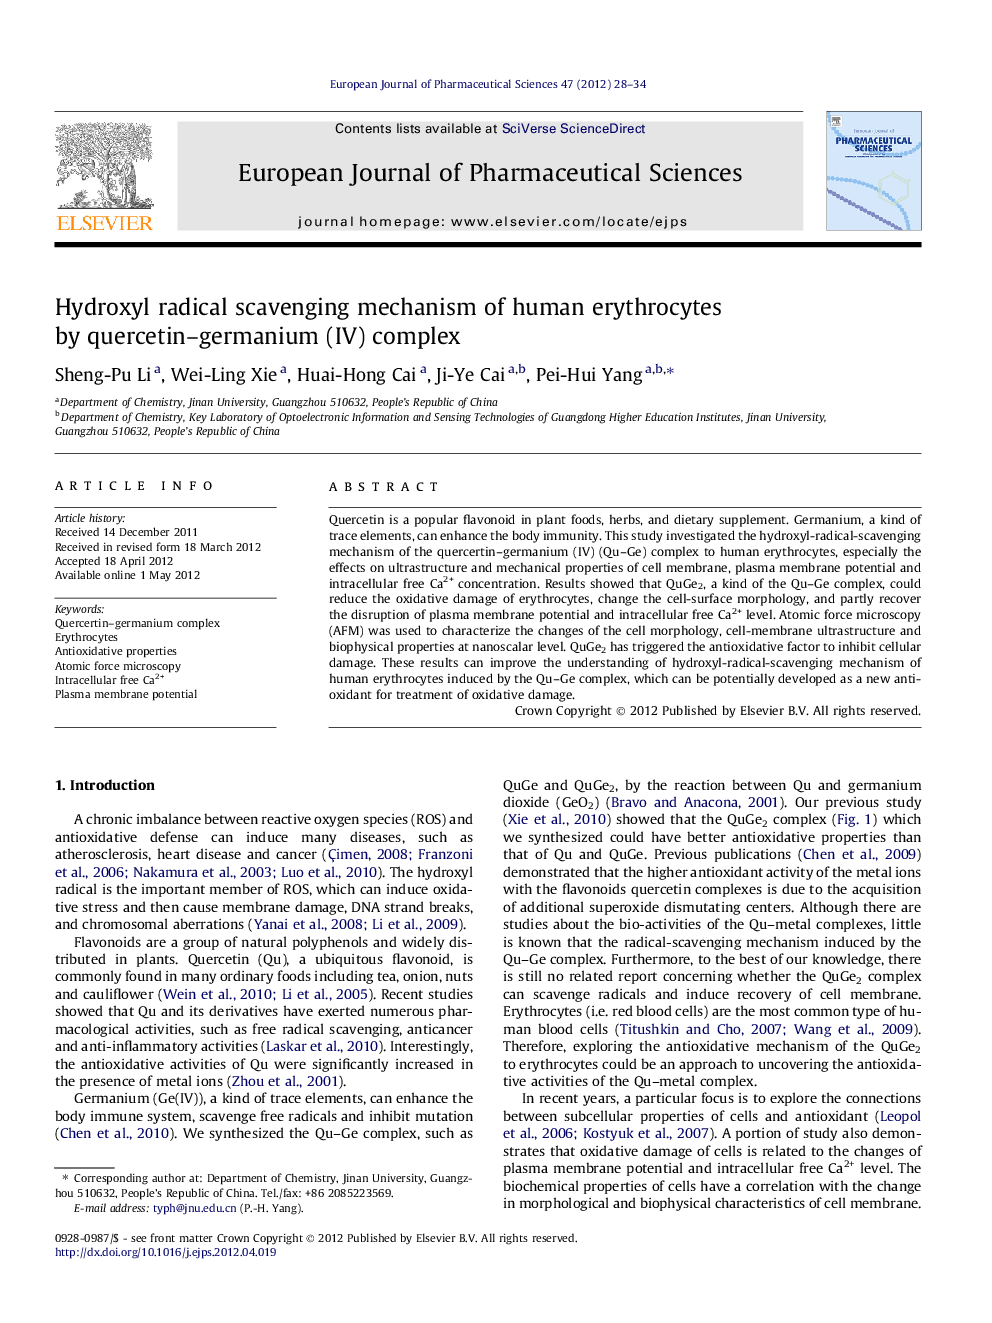 Hydroxyl radical scavenging mechanism of human erythrocytes by quercetin–germanium (IV) complex